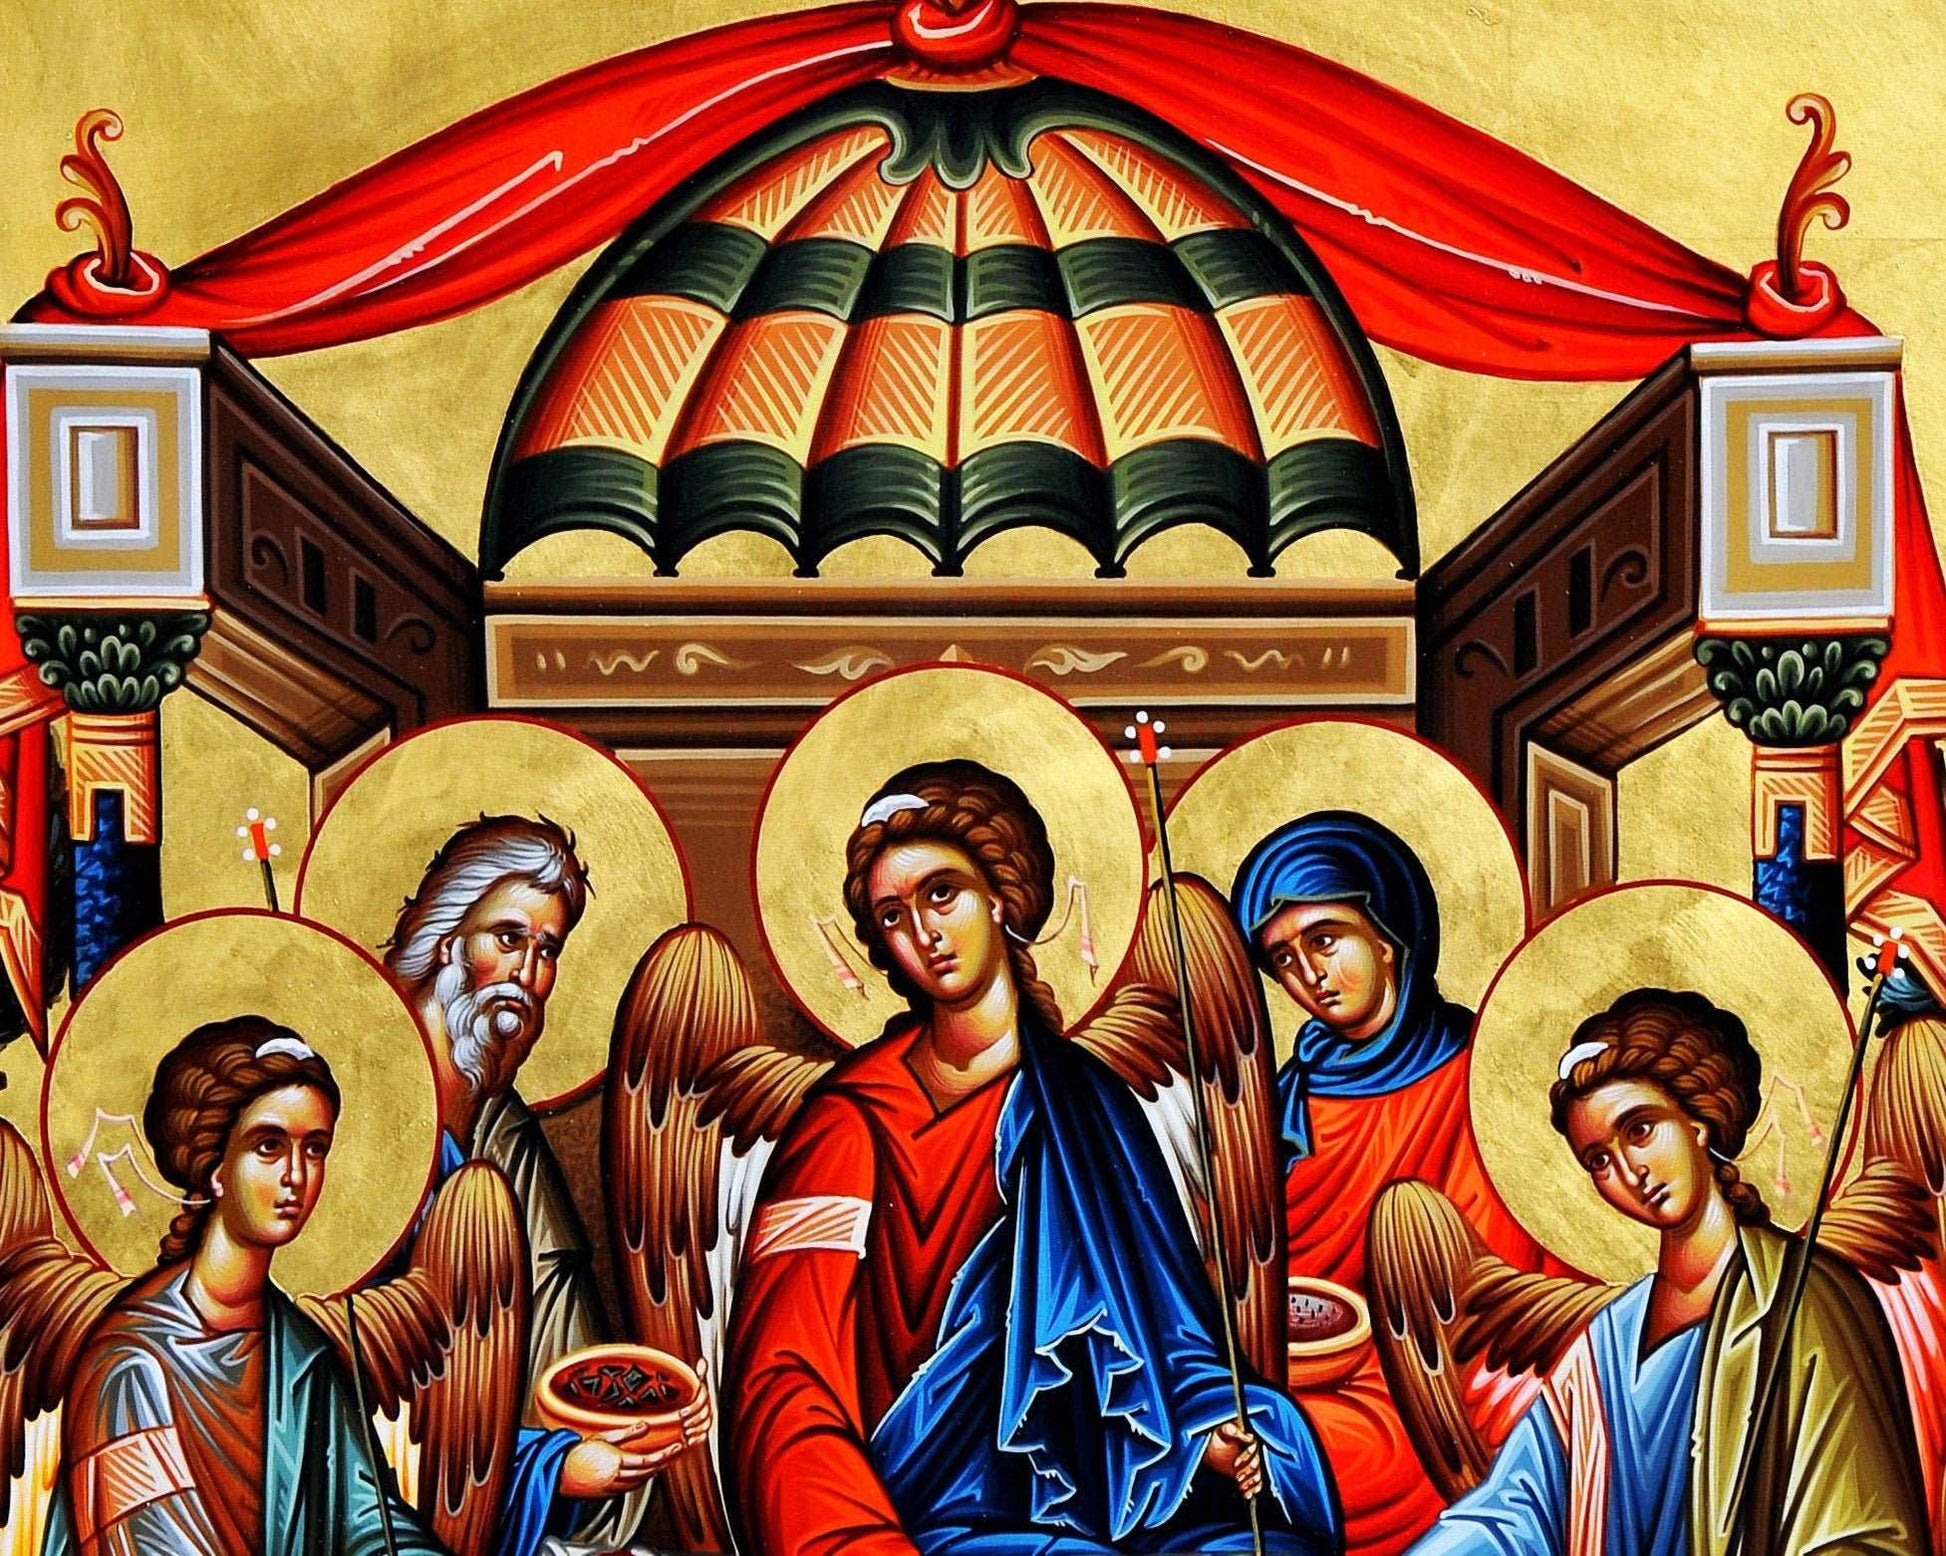 Abraham's Hospitality icon, Handmade Greek Orthodox Icon of the Holy T-TheHolyArt